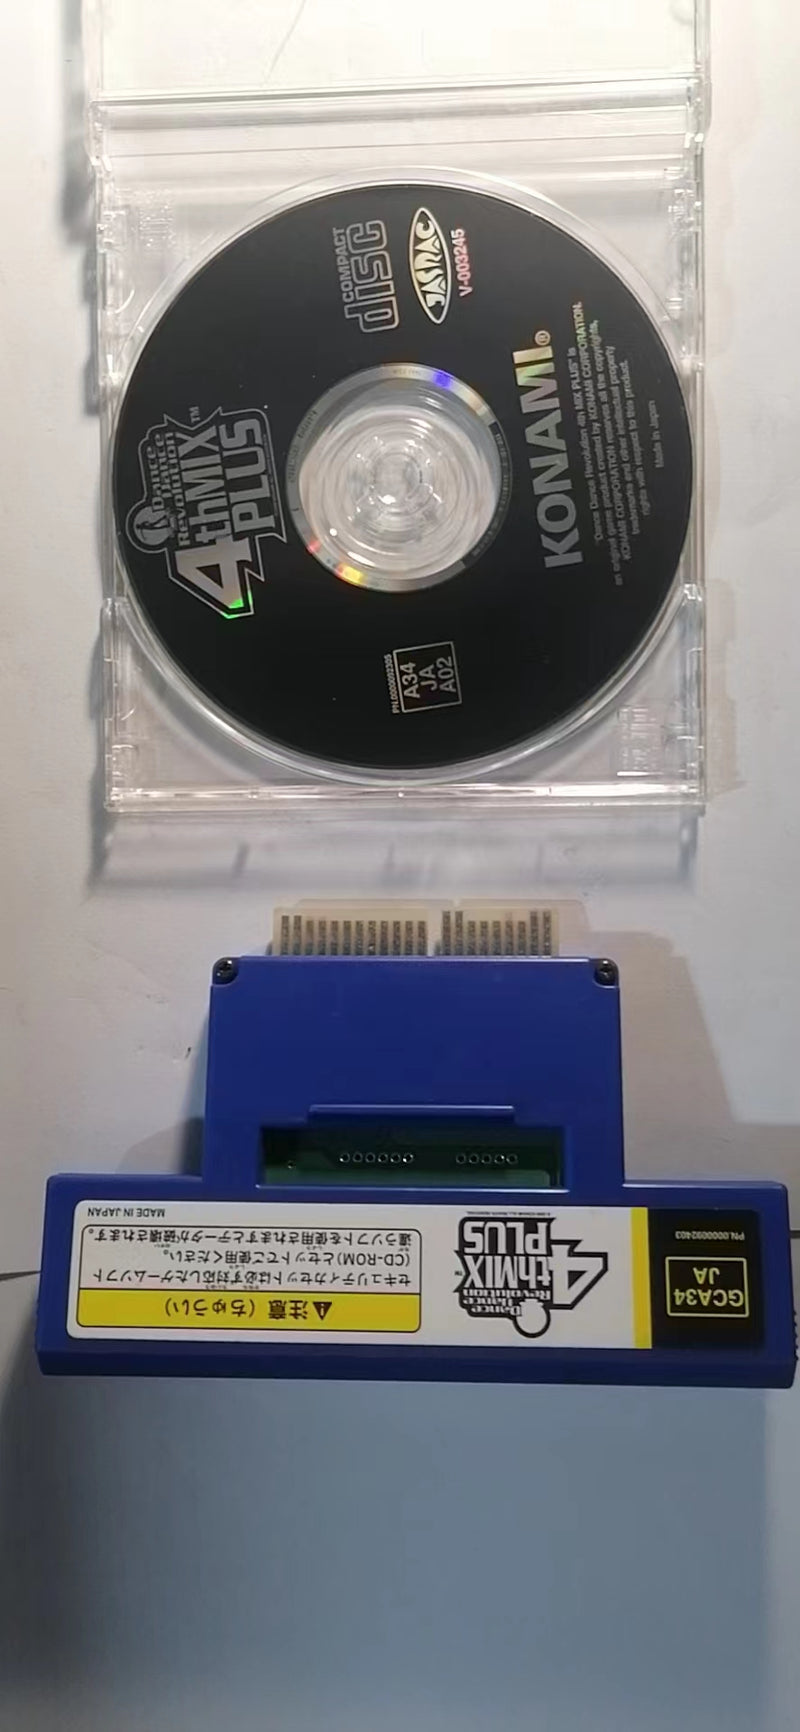 konami cd-rom DDR 4th MIX Plus w/key .